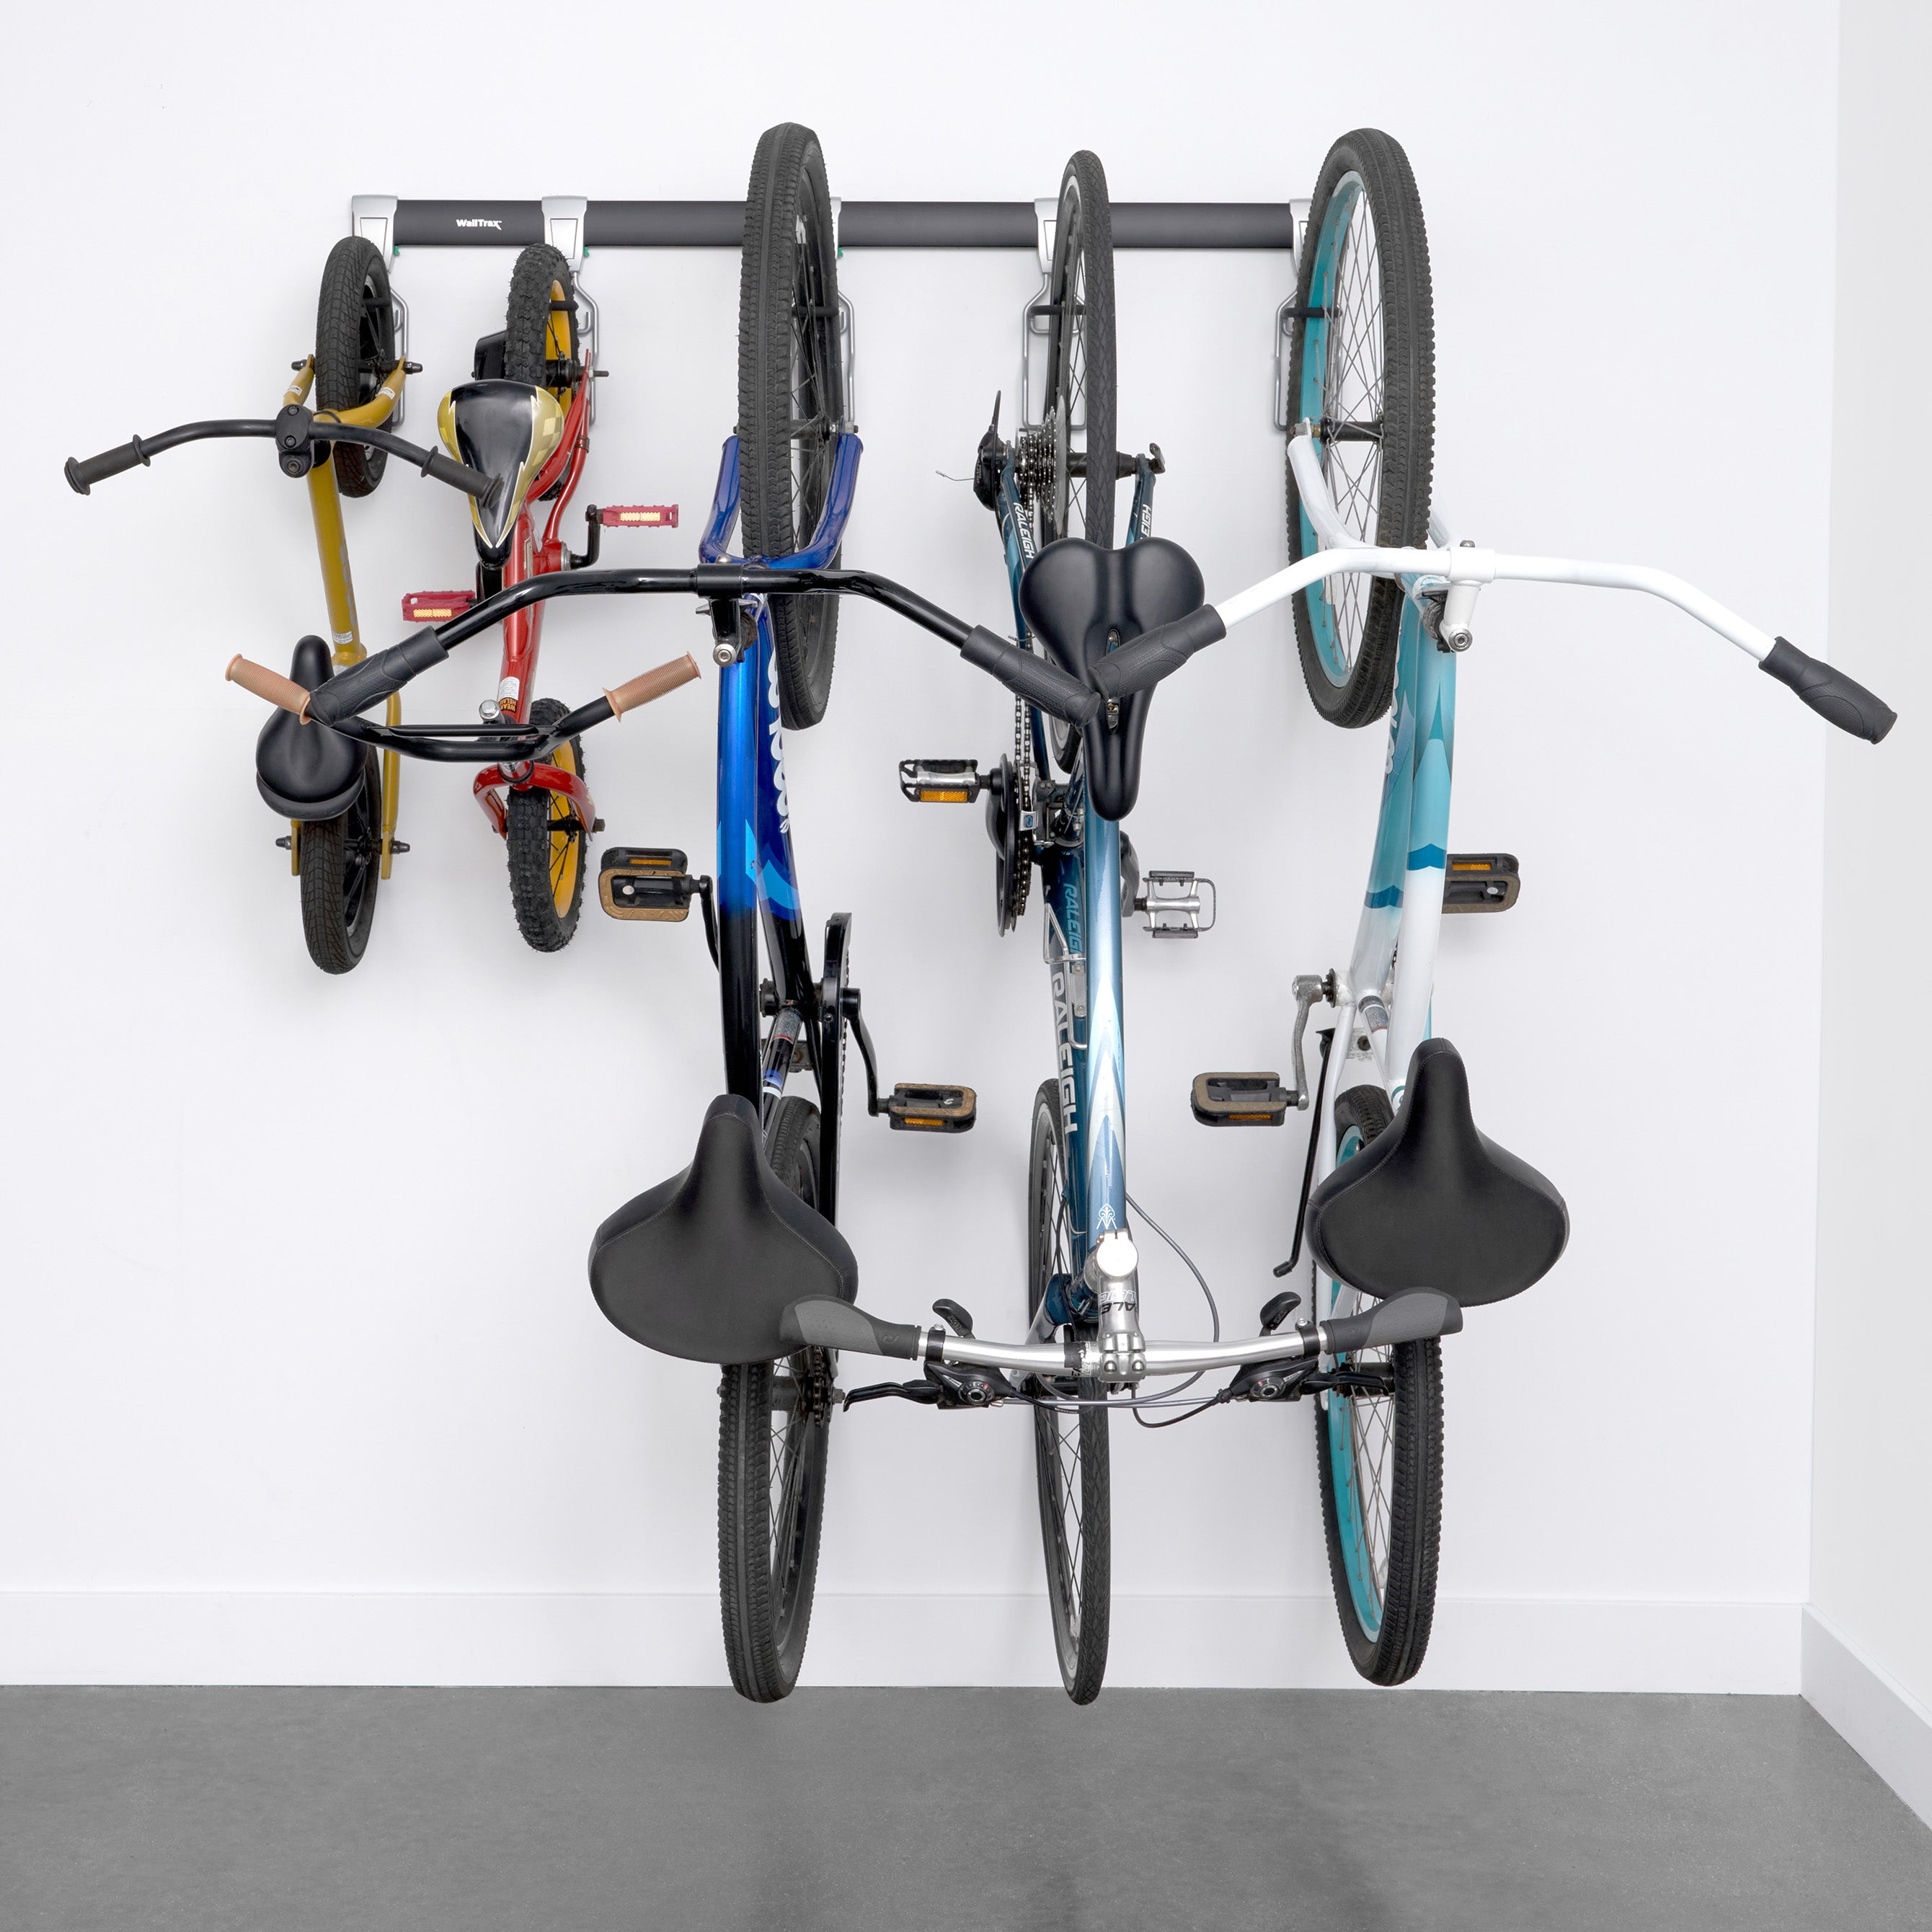 Bike Hooks For Garage, Wall & Storage